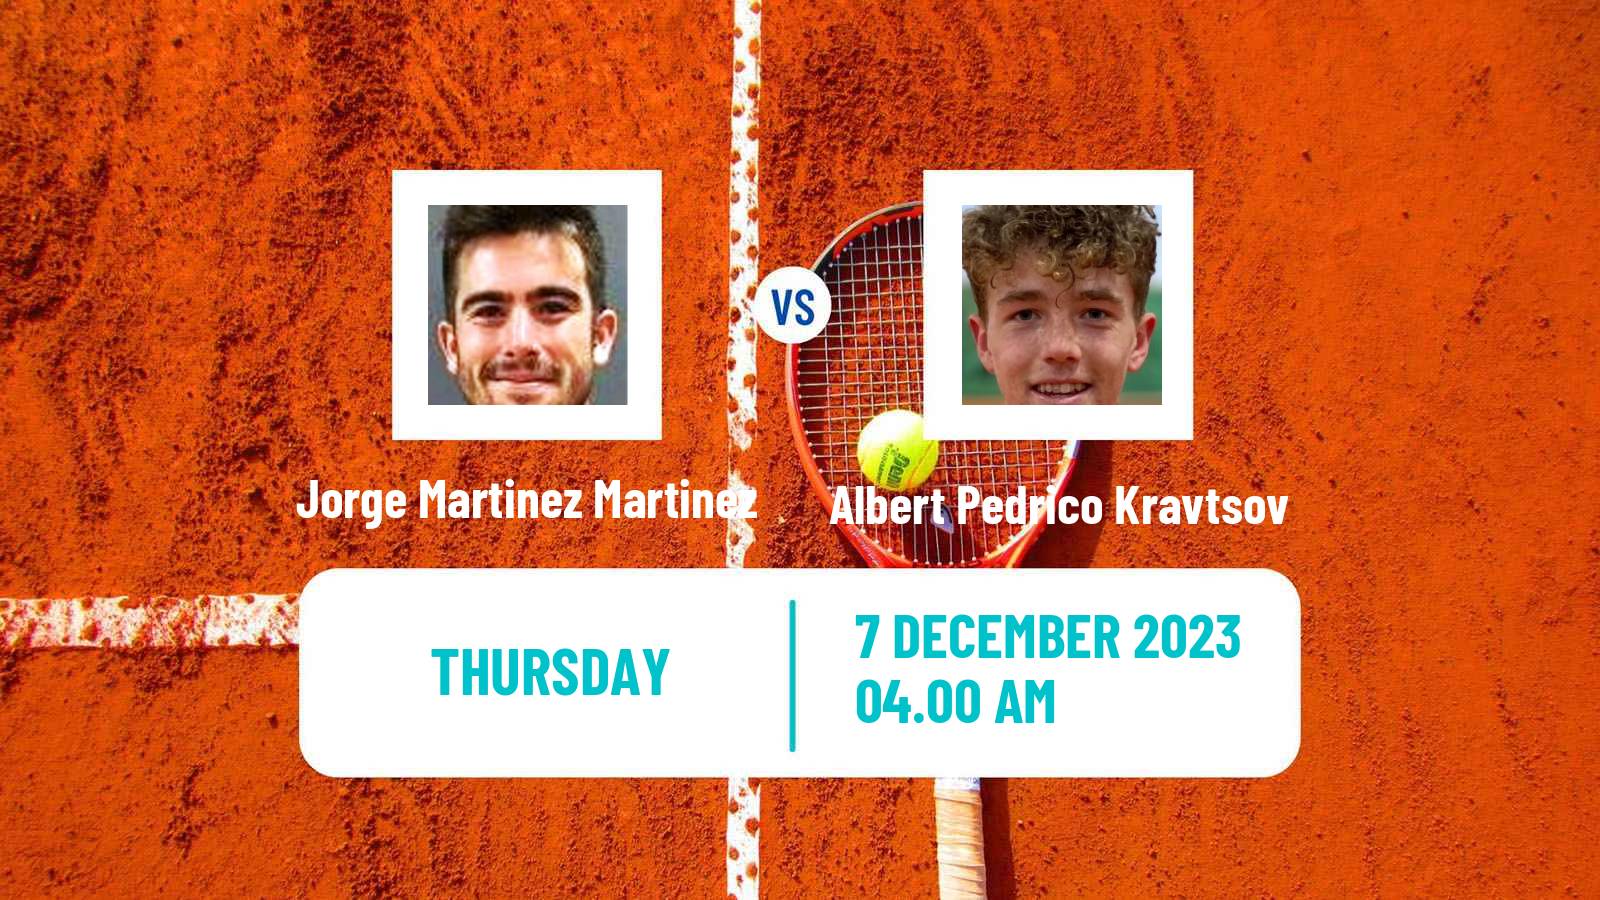 Tennis ITF M15 Madrid 3 Men Jorge Martinez Martinez - Albert Pedrico Kravtsov